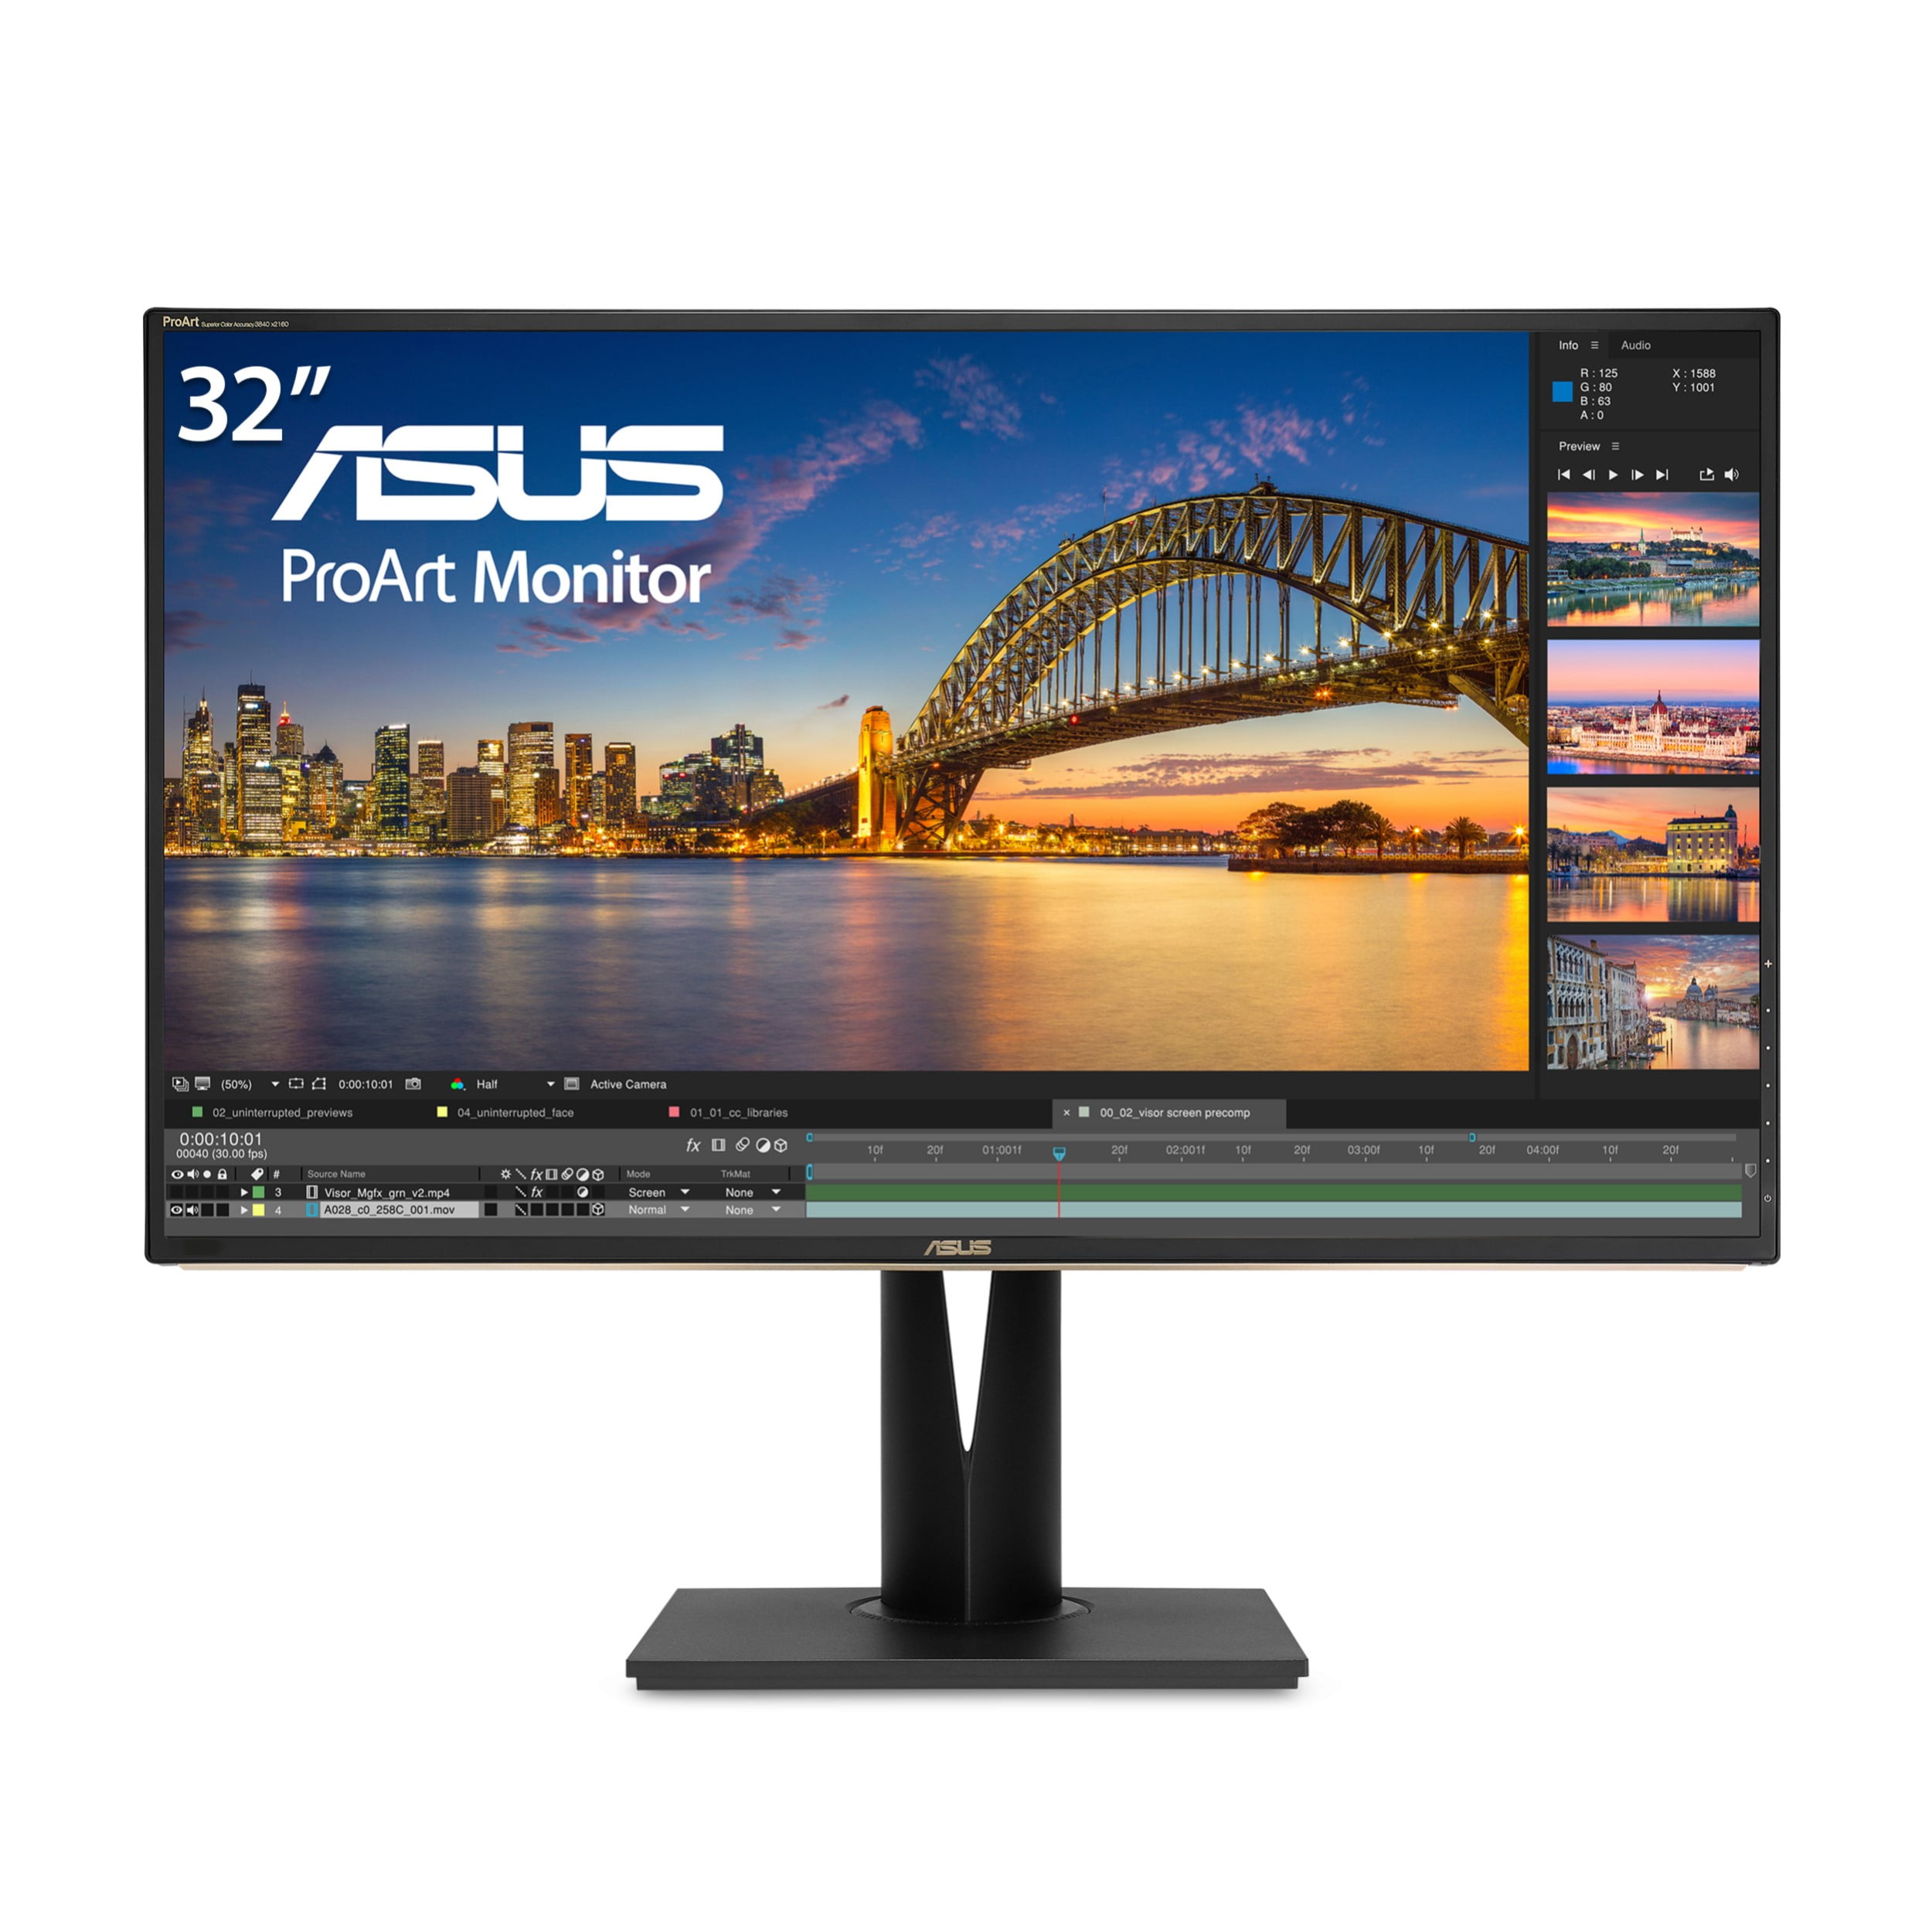 Asus ProArt PA329C 32” 4K 3840 X 2160 HDR10 Displayhdr600 Monitor 100% Adobe RGB IPS Eye Care DisplayPort USB Type-C HDMI,Black